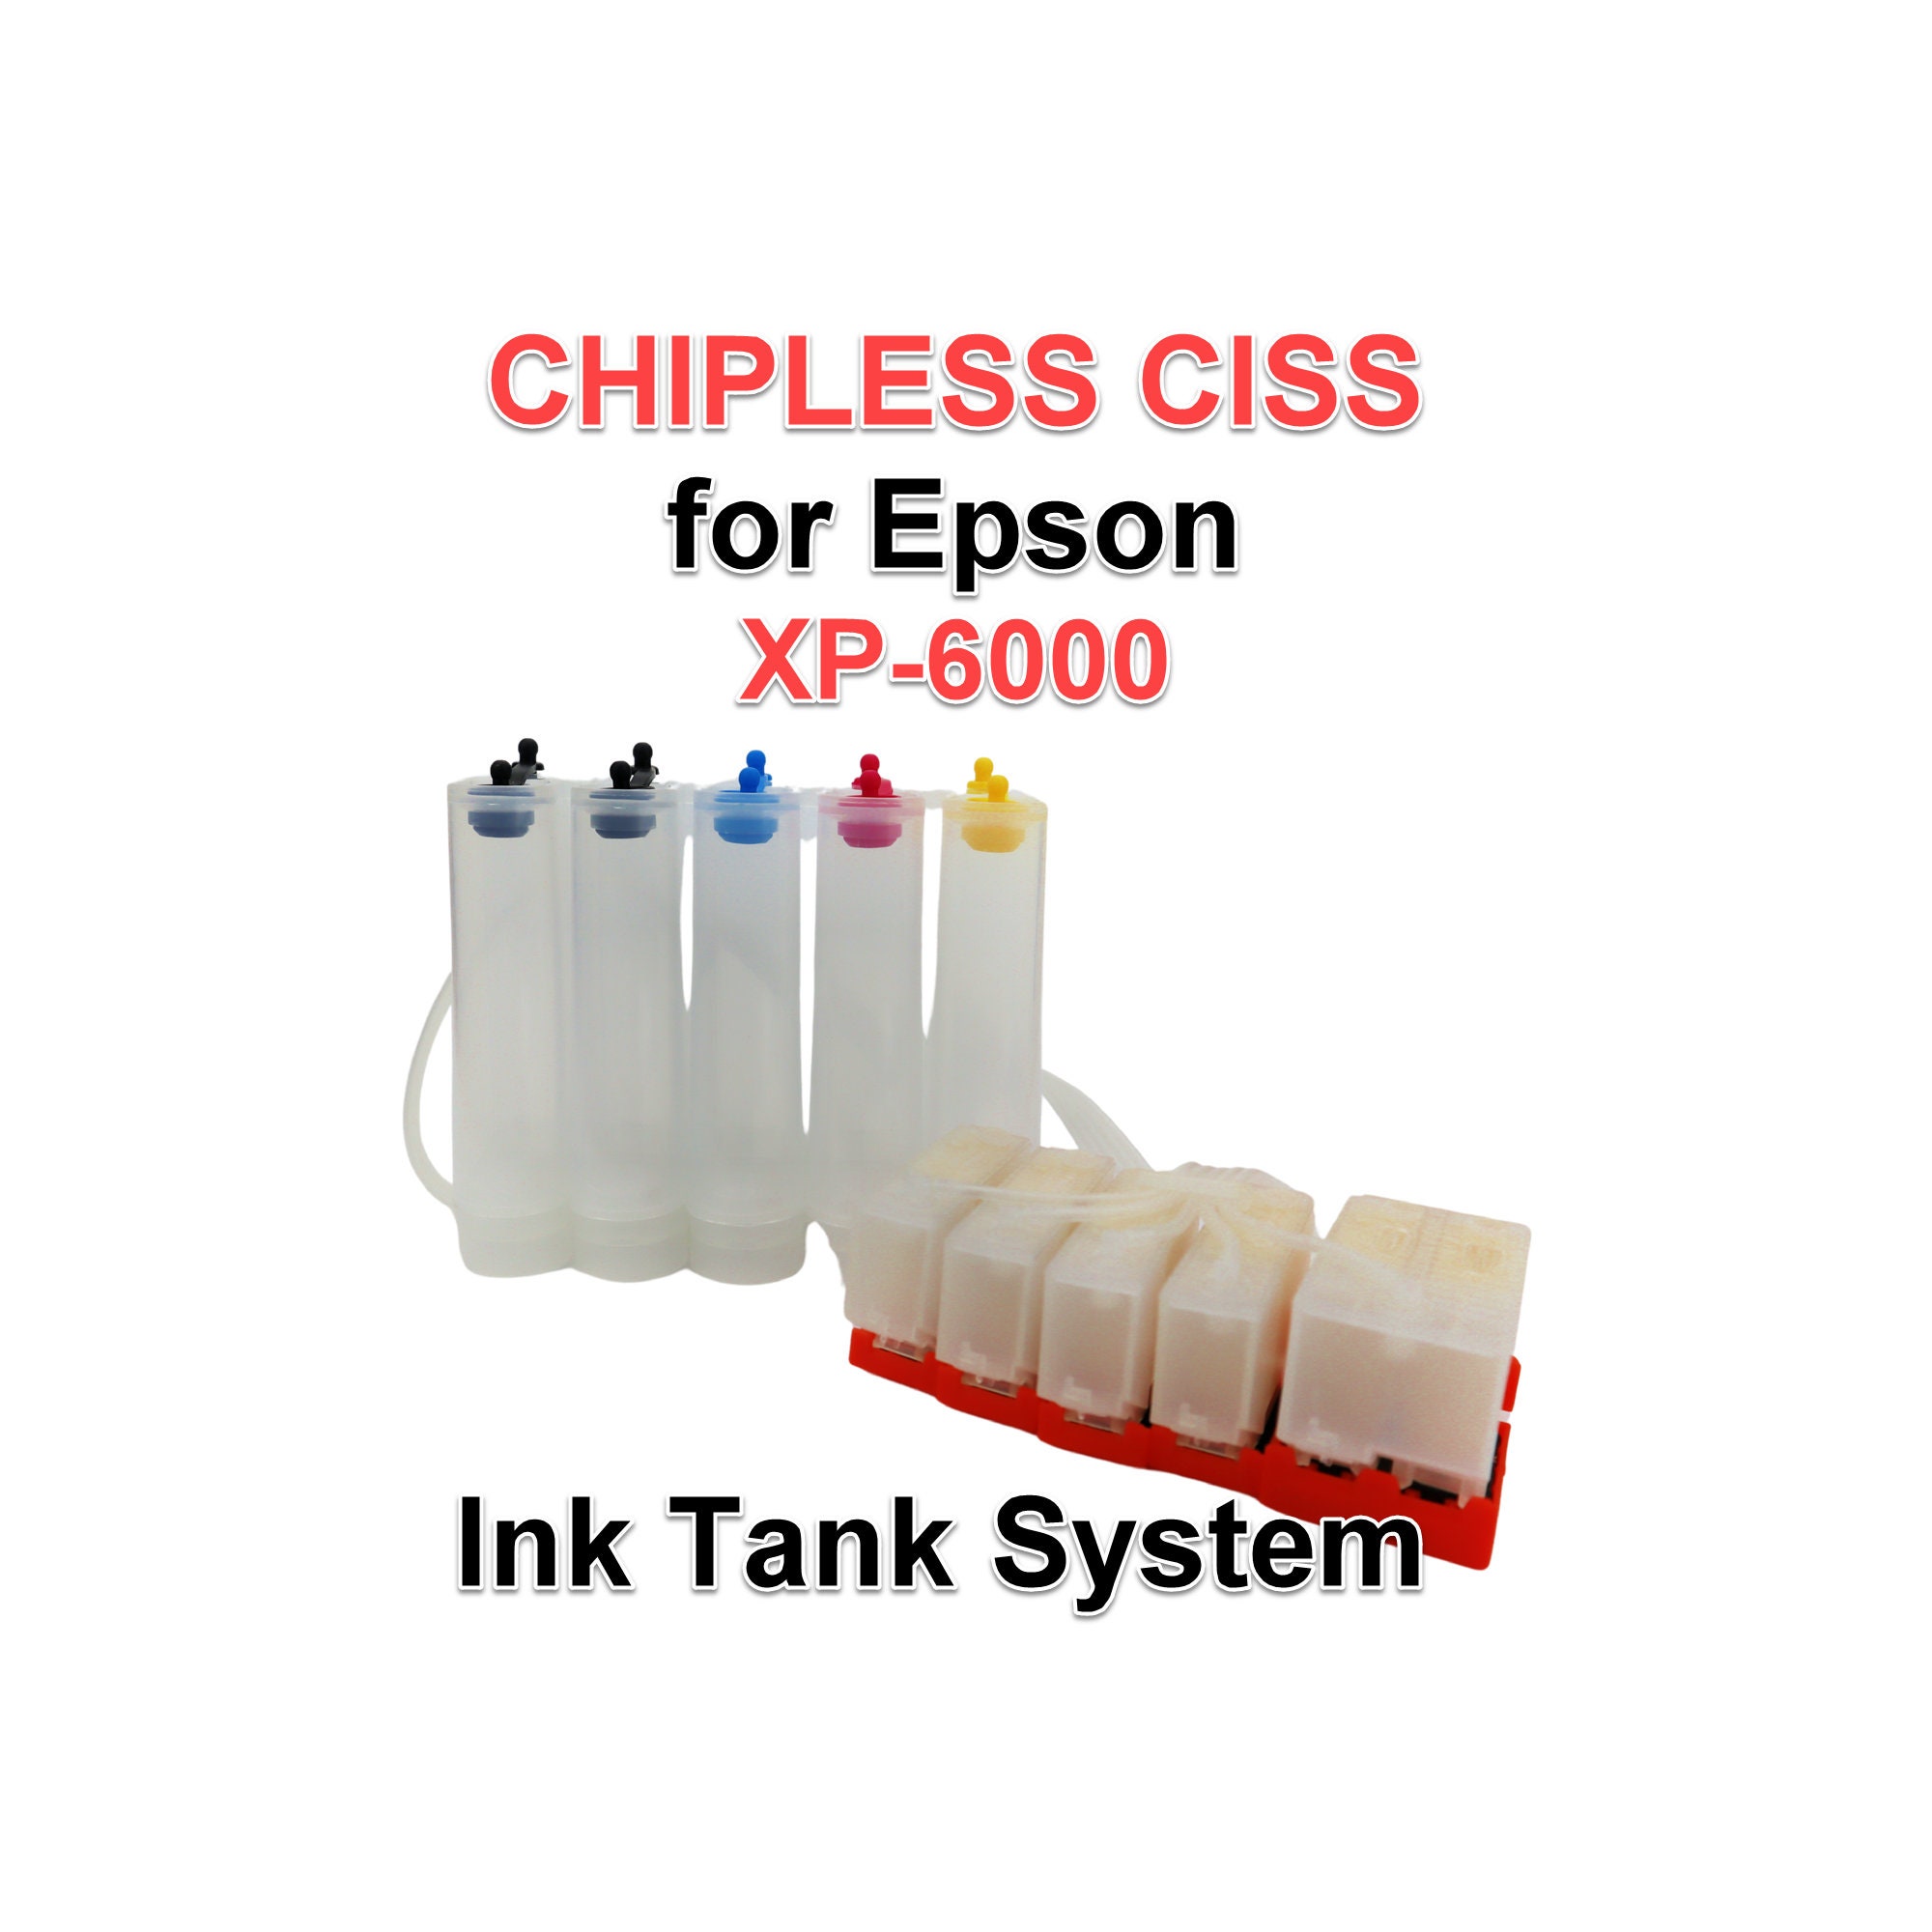 Ciss for Epson printer: Epson XP-6105